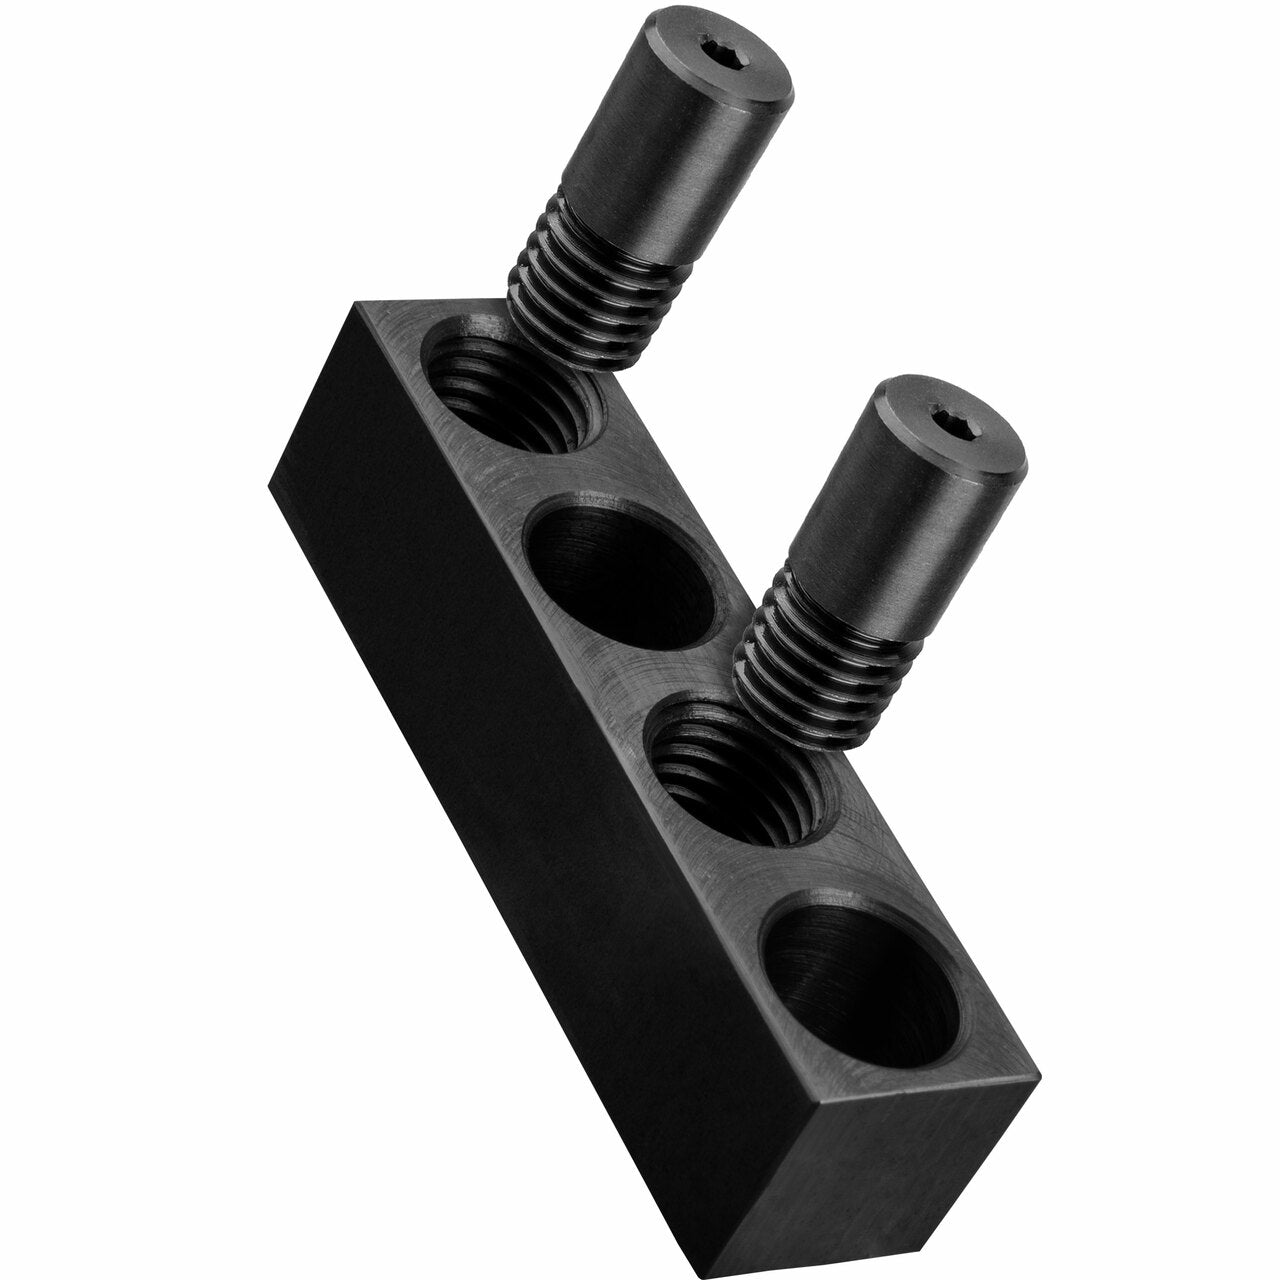 Fence Pin Blocks (4"x1"x1") - 3/4" System